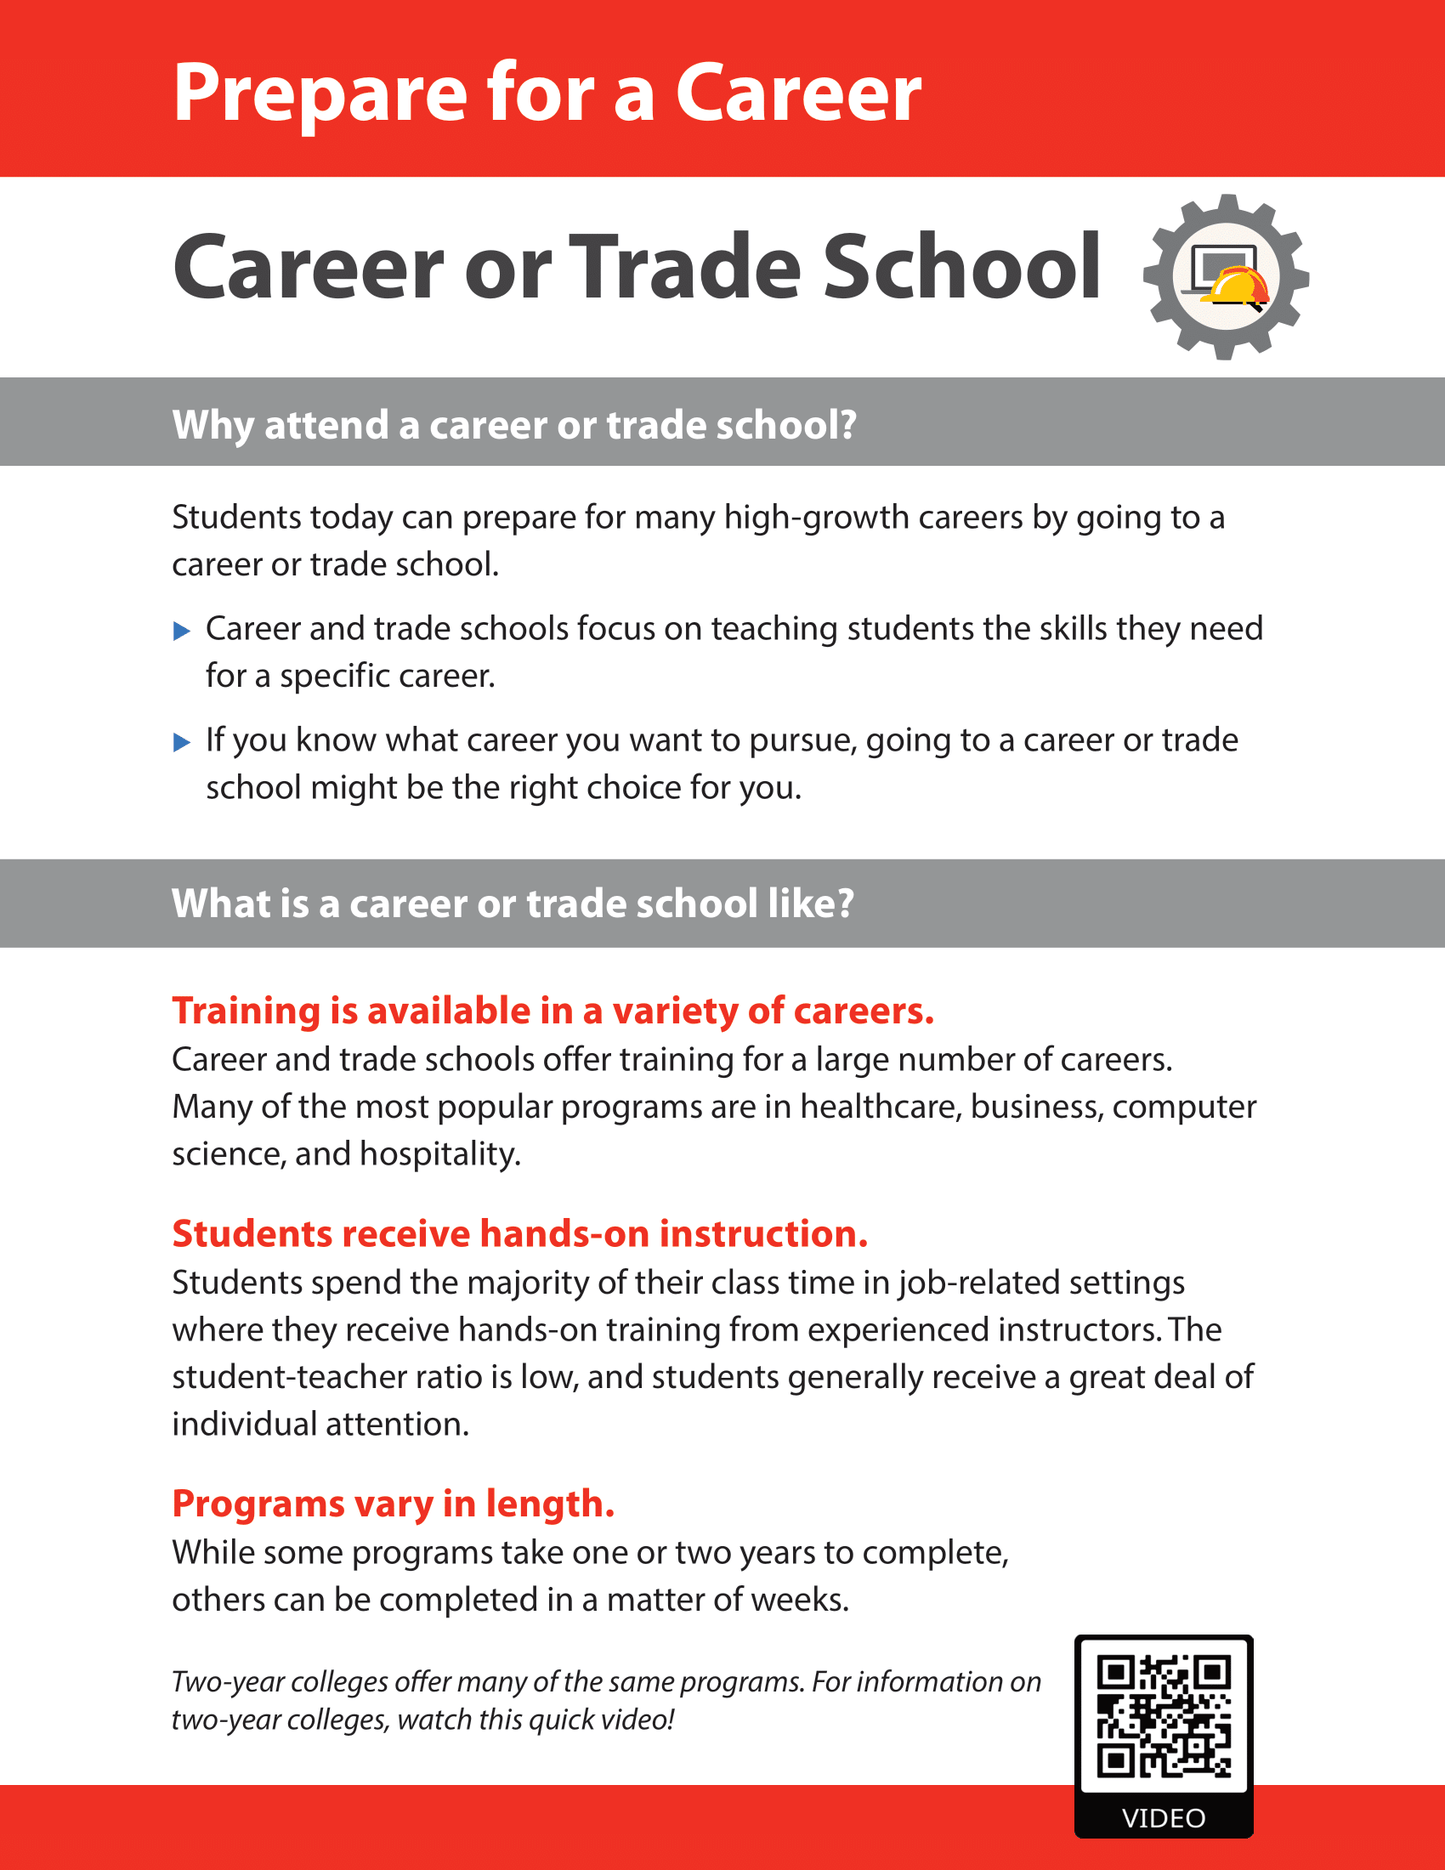 Prepare for a Career - Career or Trade School